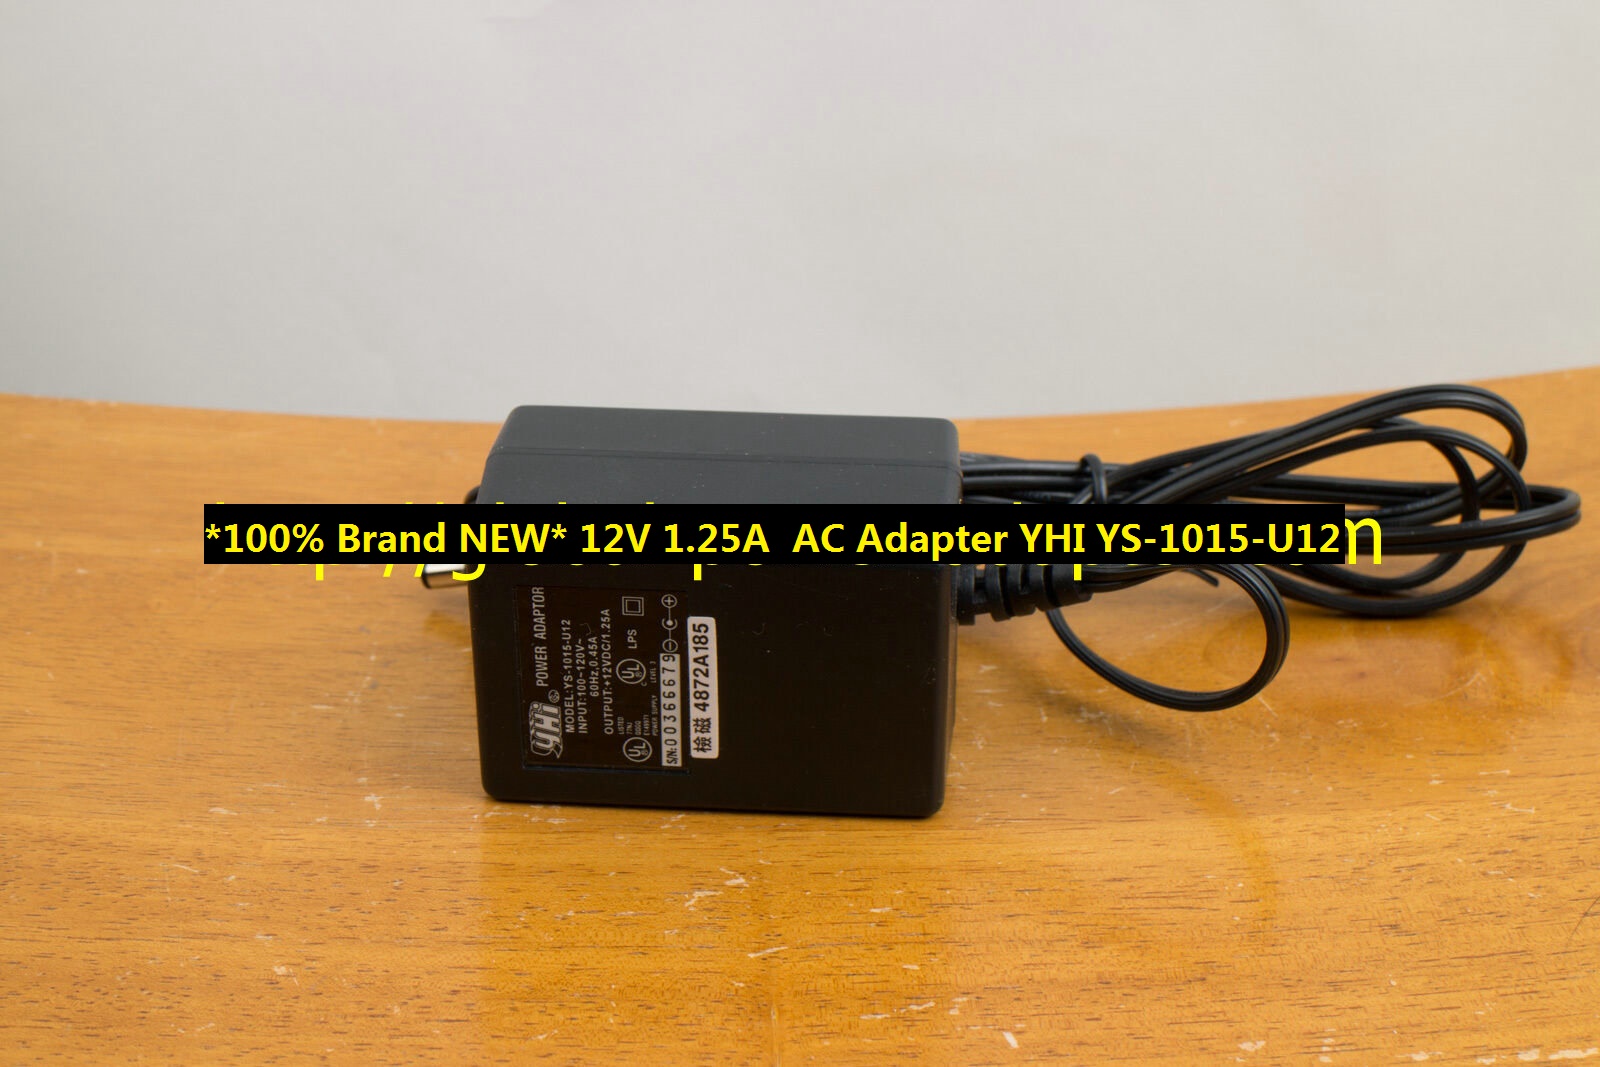 *100% Brand NEW* AC Adapter 12V 1.25A YHI YS-1015-U12 HP ScanJet 2300C 3400C 3400Cxi 4300C 4300Cse 5